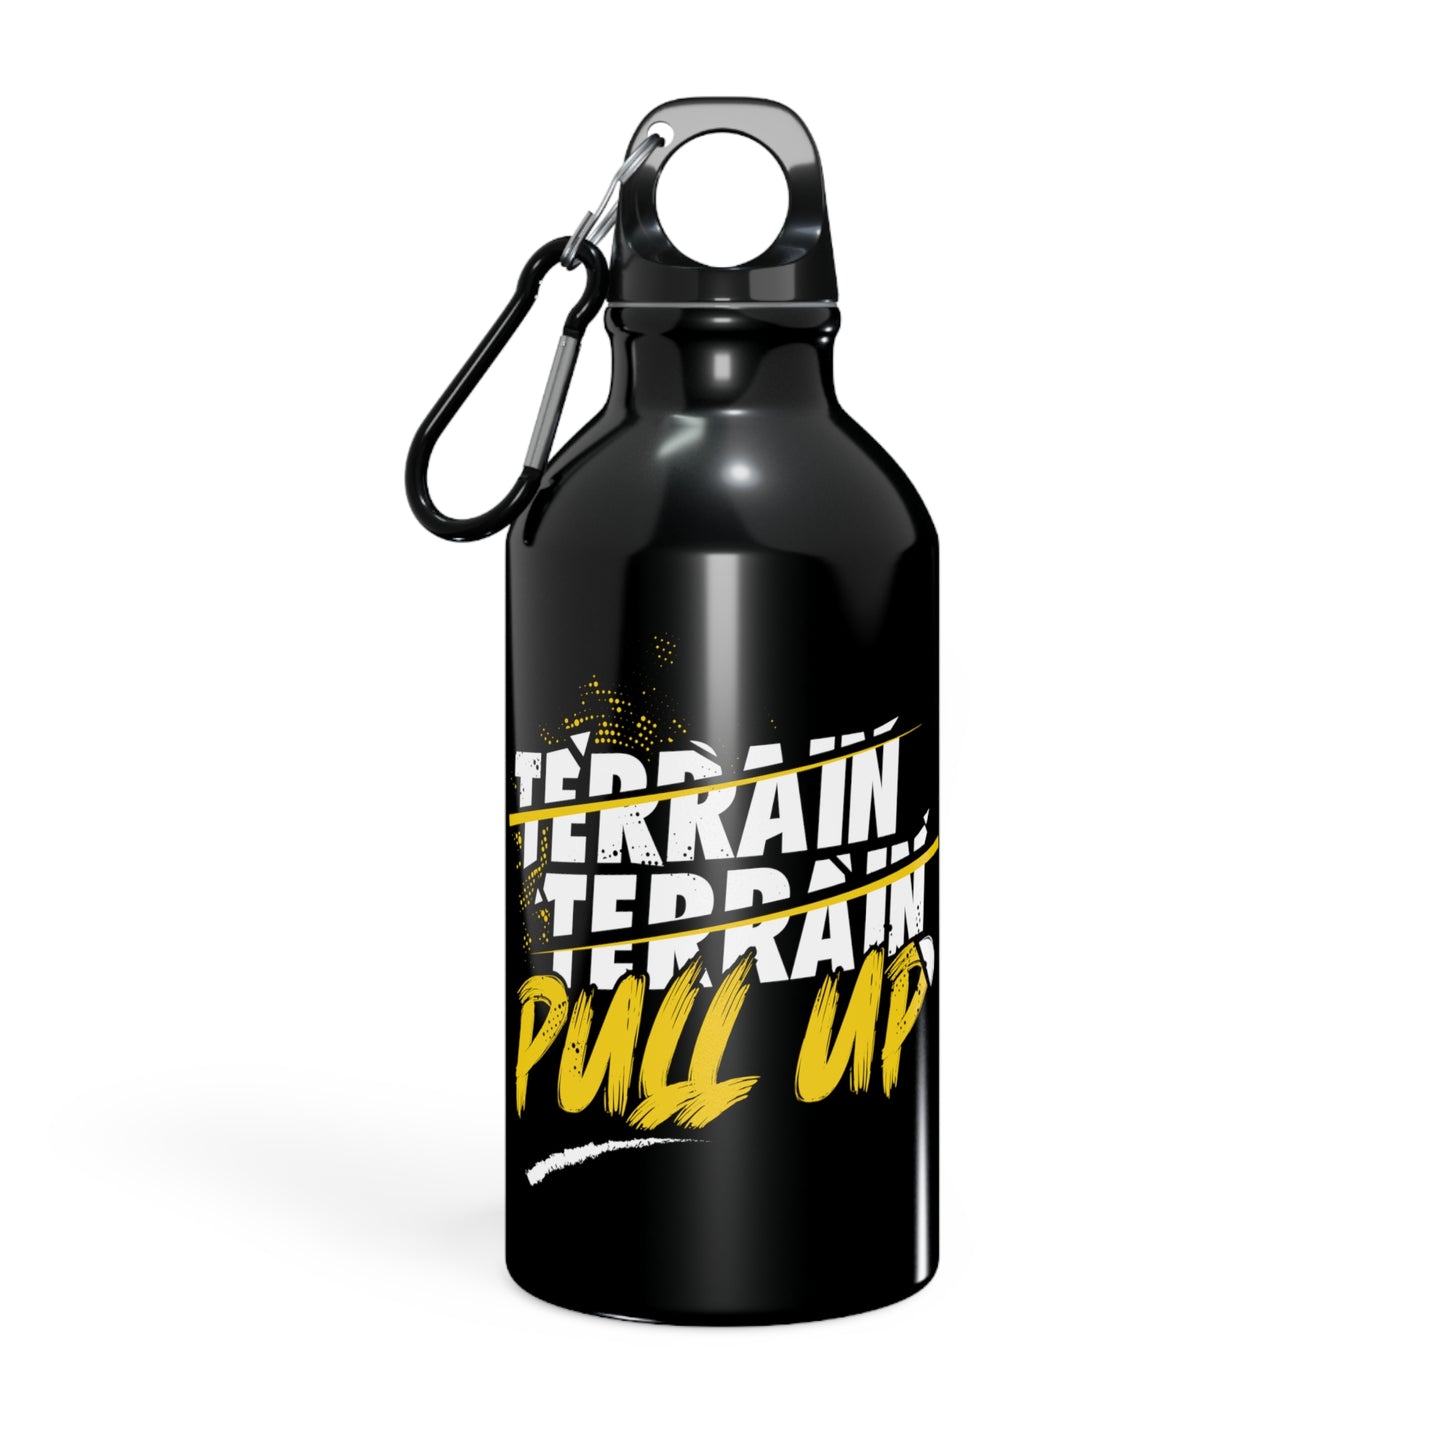 Oregon Sport Bottle - "Terrain, Terrain, Pull Up!"